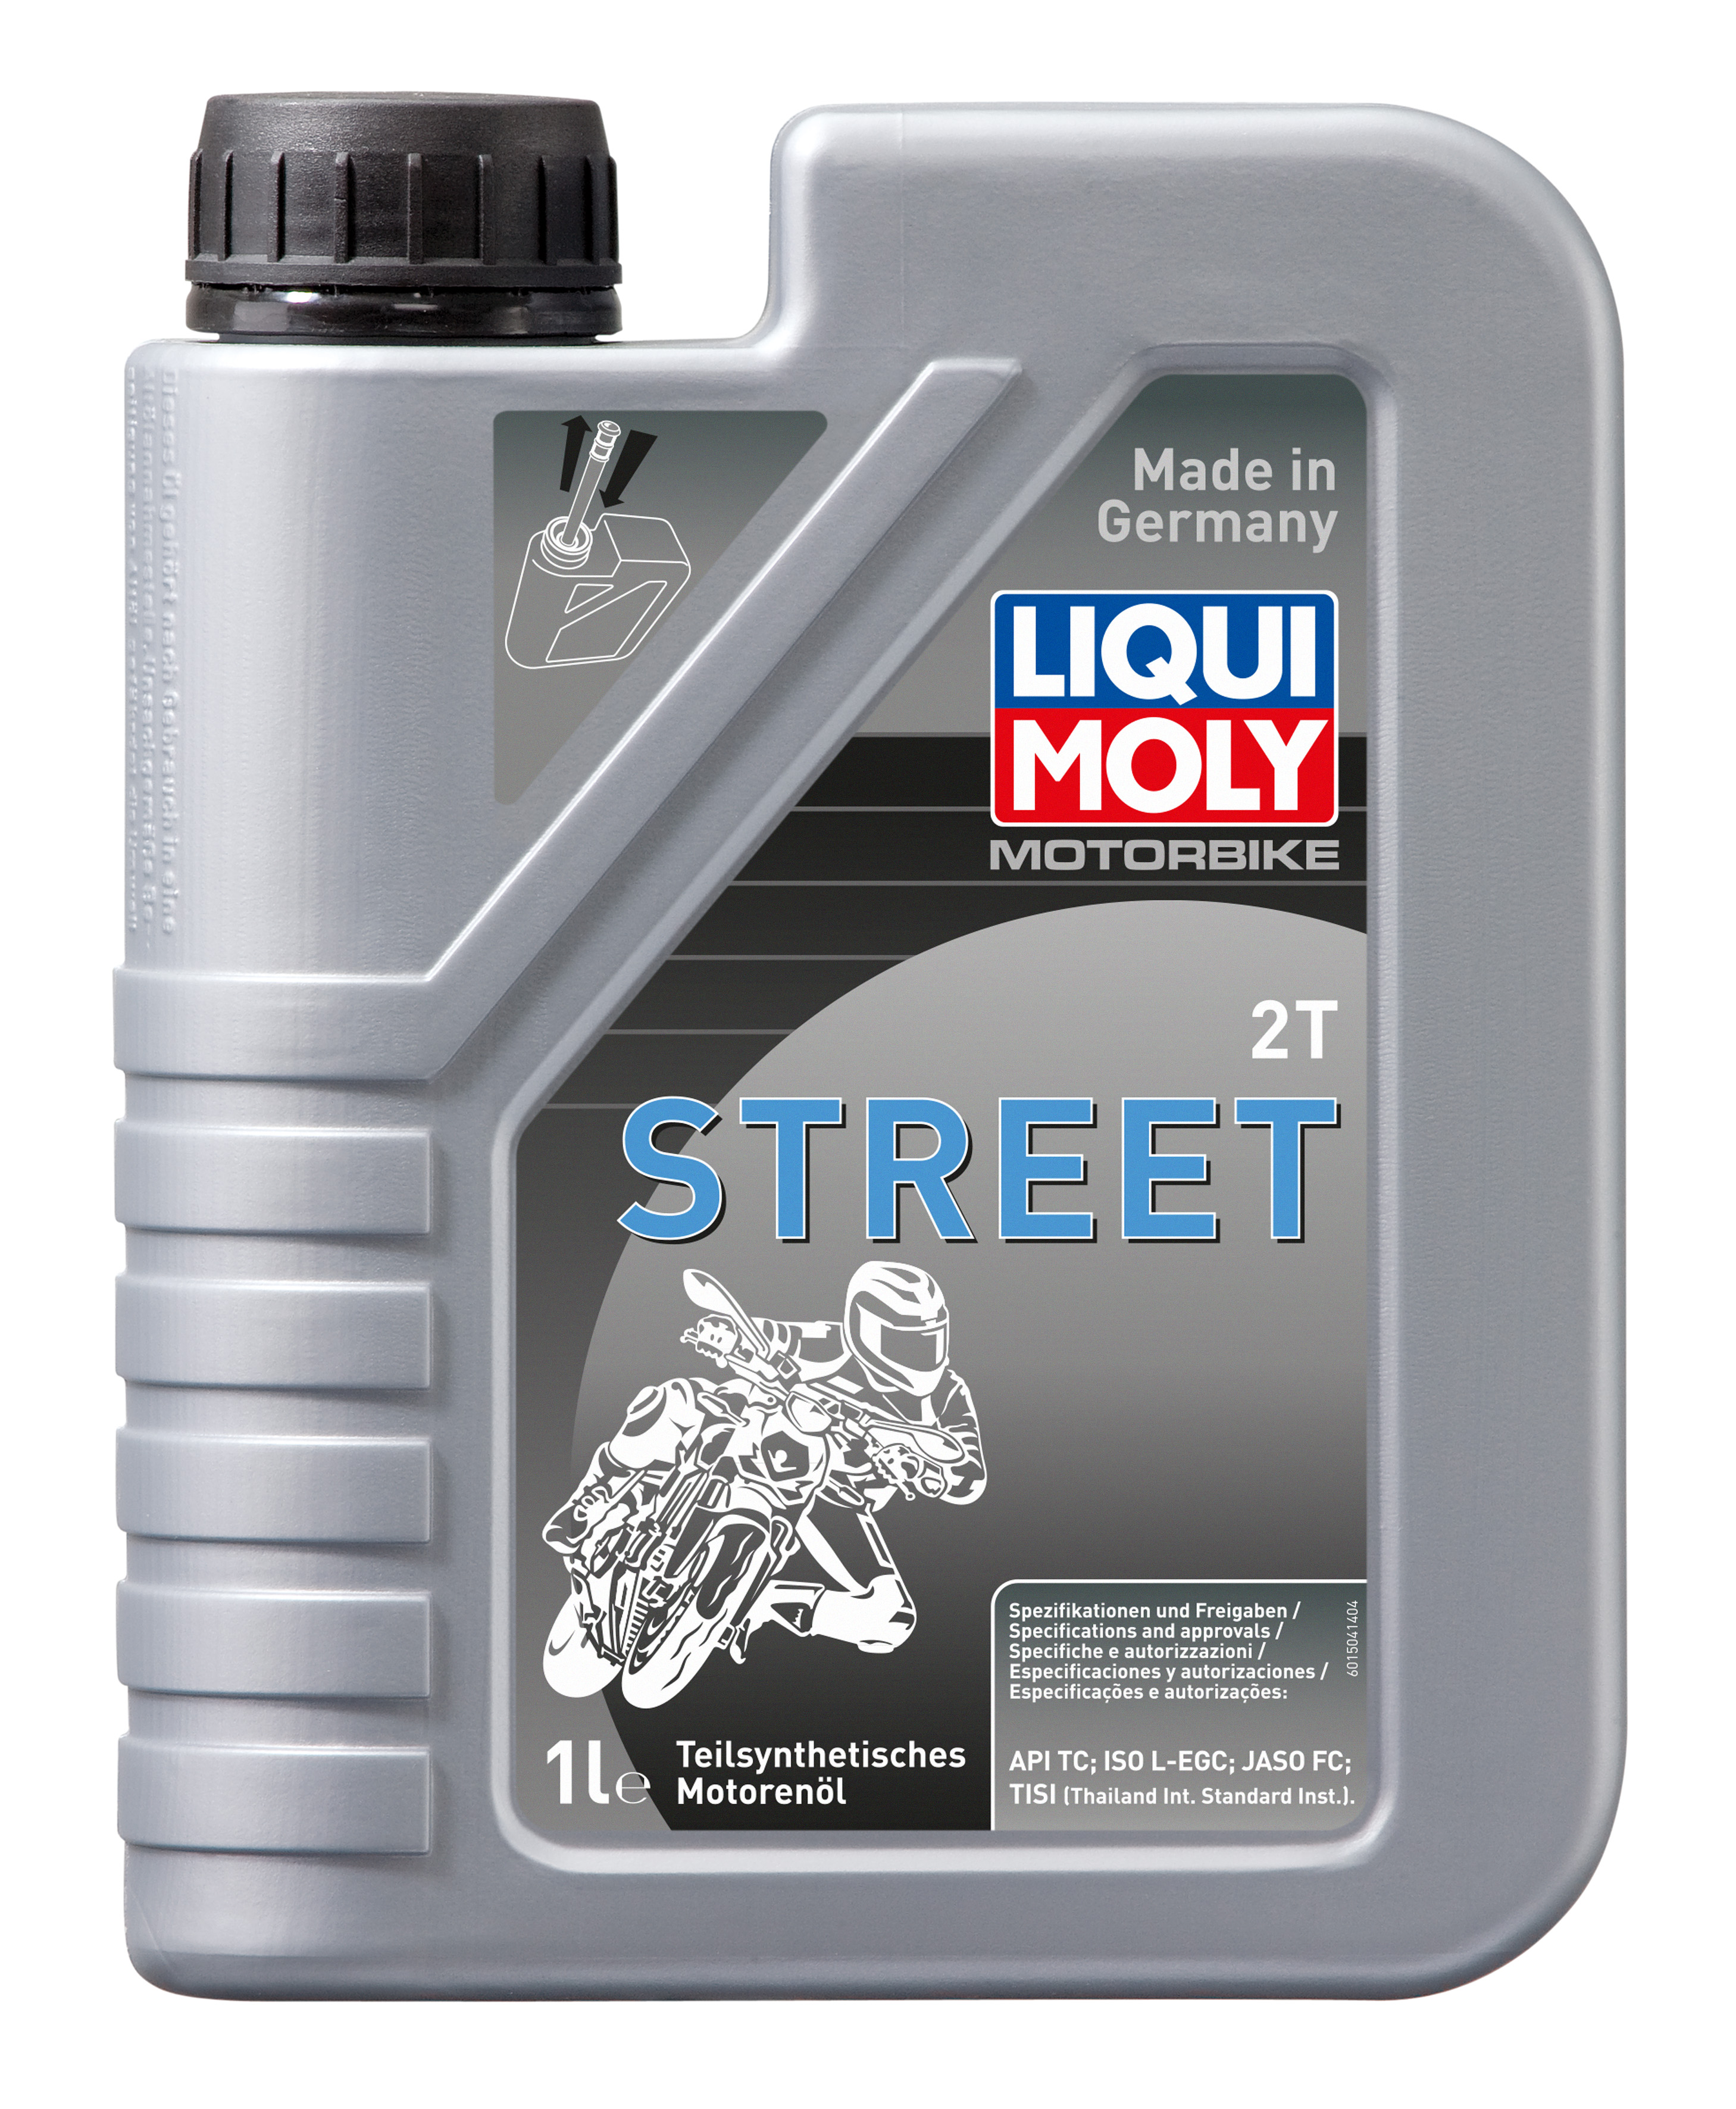  Liqui Moly 2T Motorbike Street  1 3981-LQ